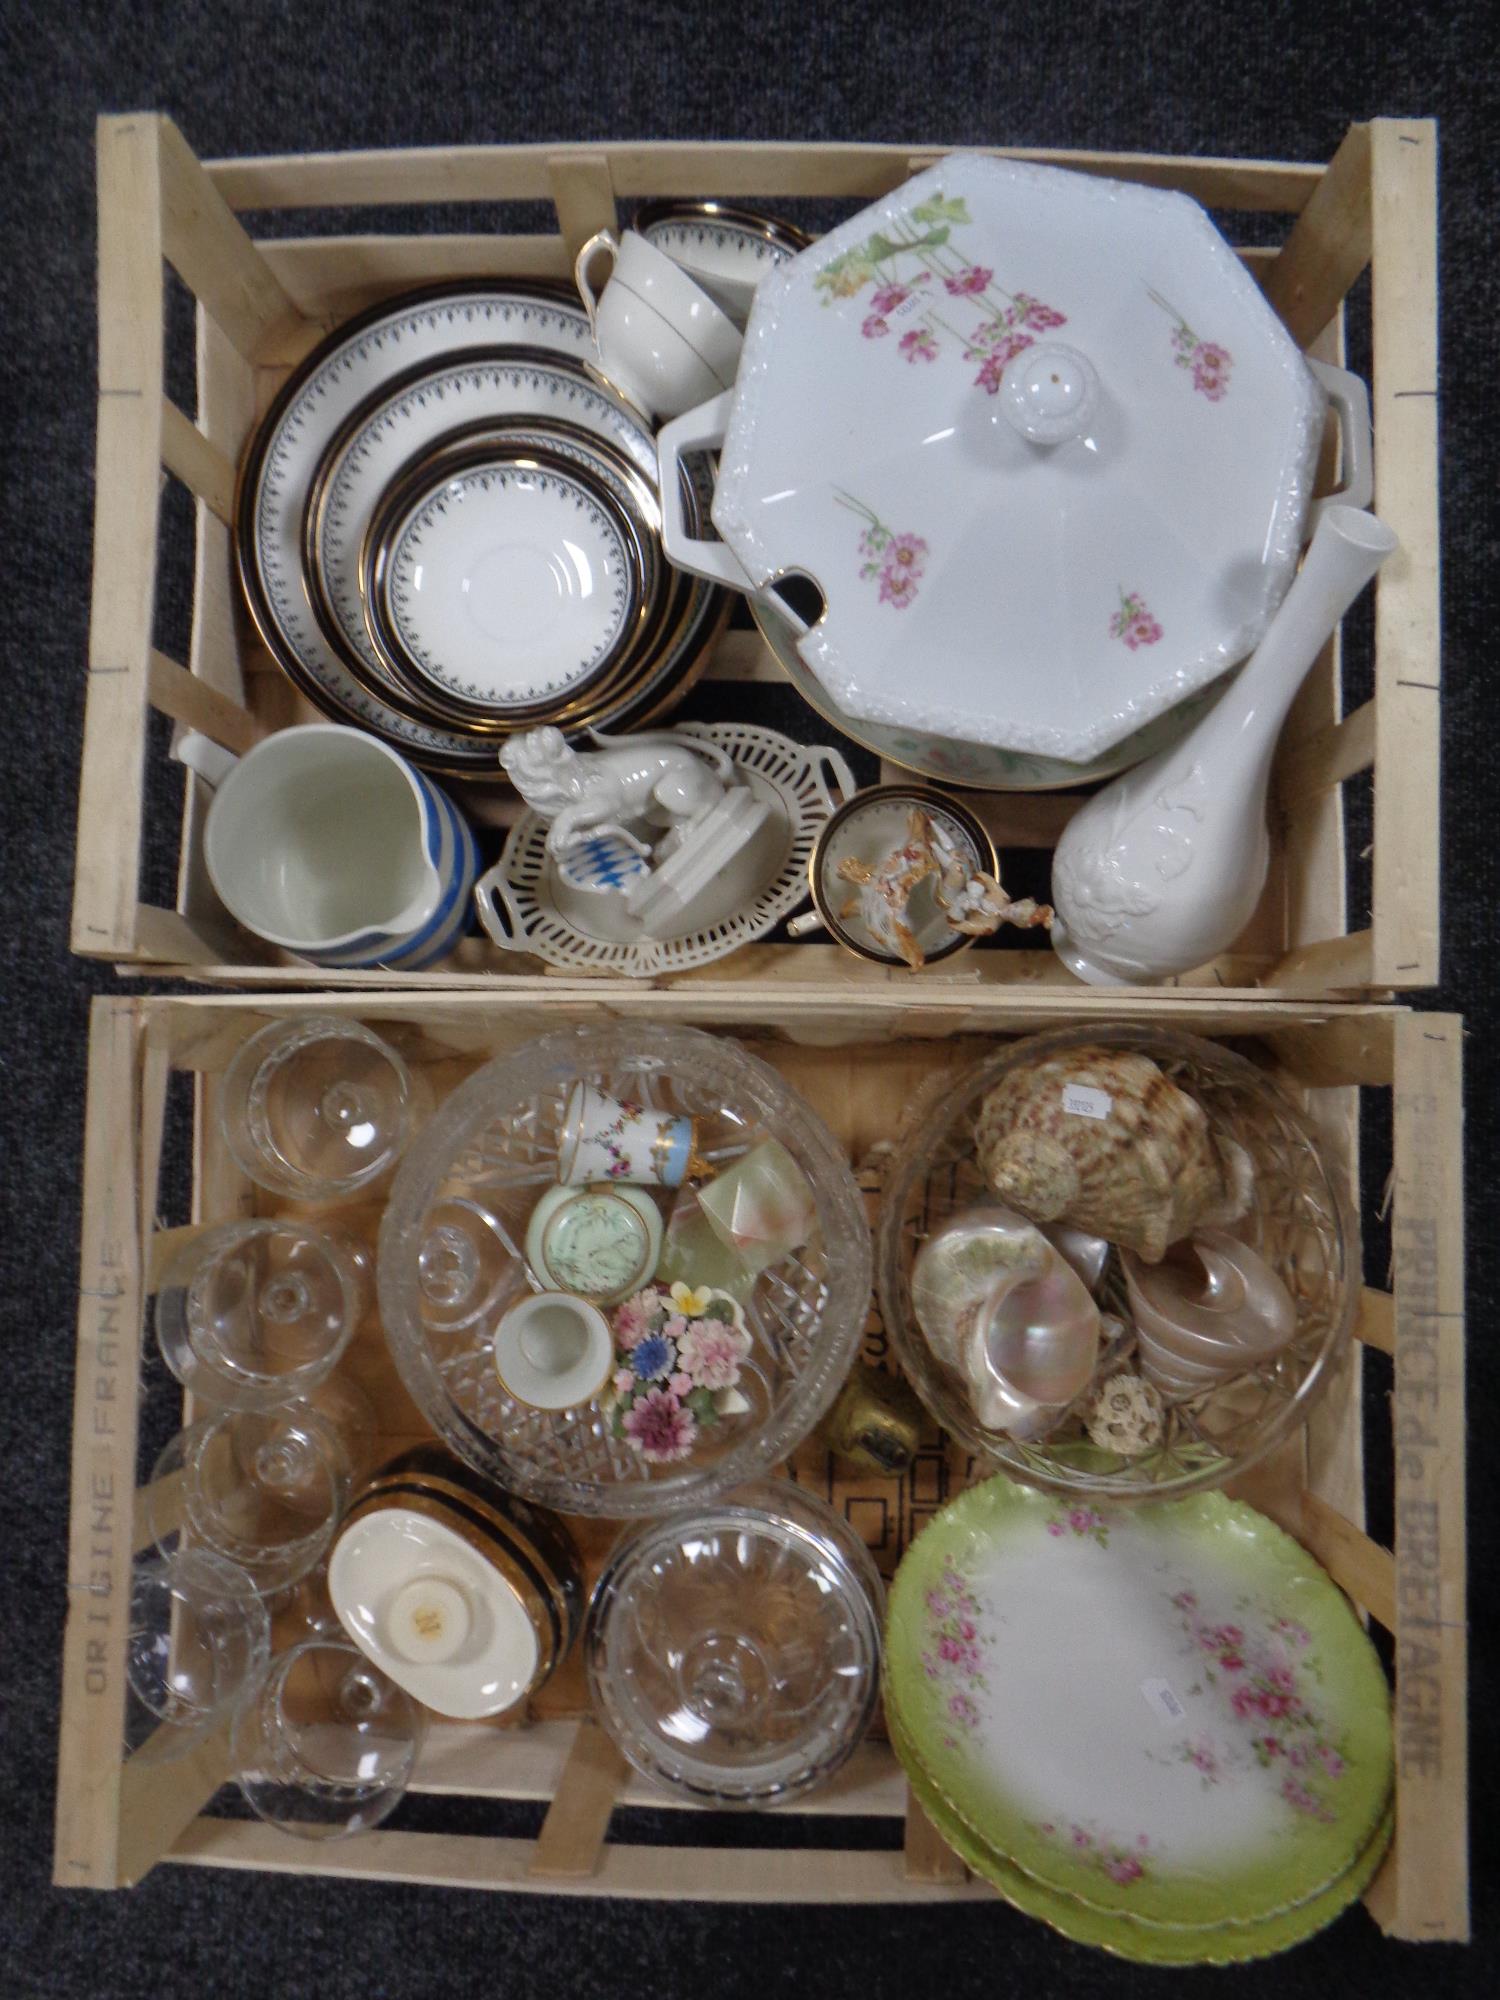 Two boxes of ceramics and glass ware, Aynsley mid night china, TG green jug, tureen,